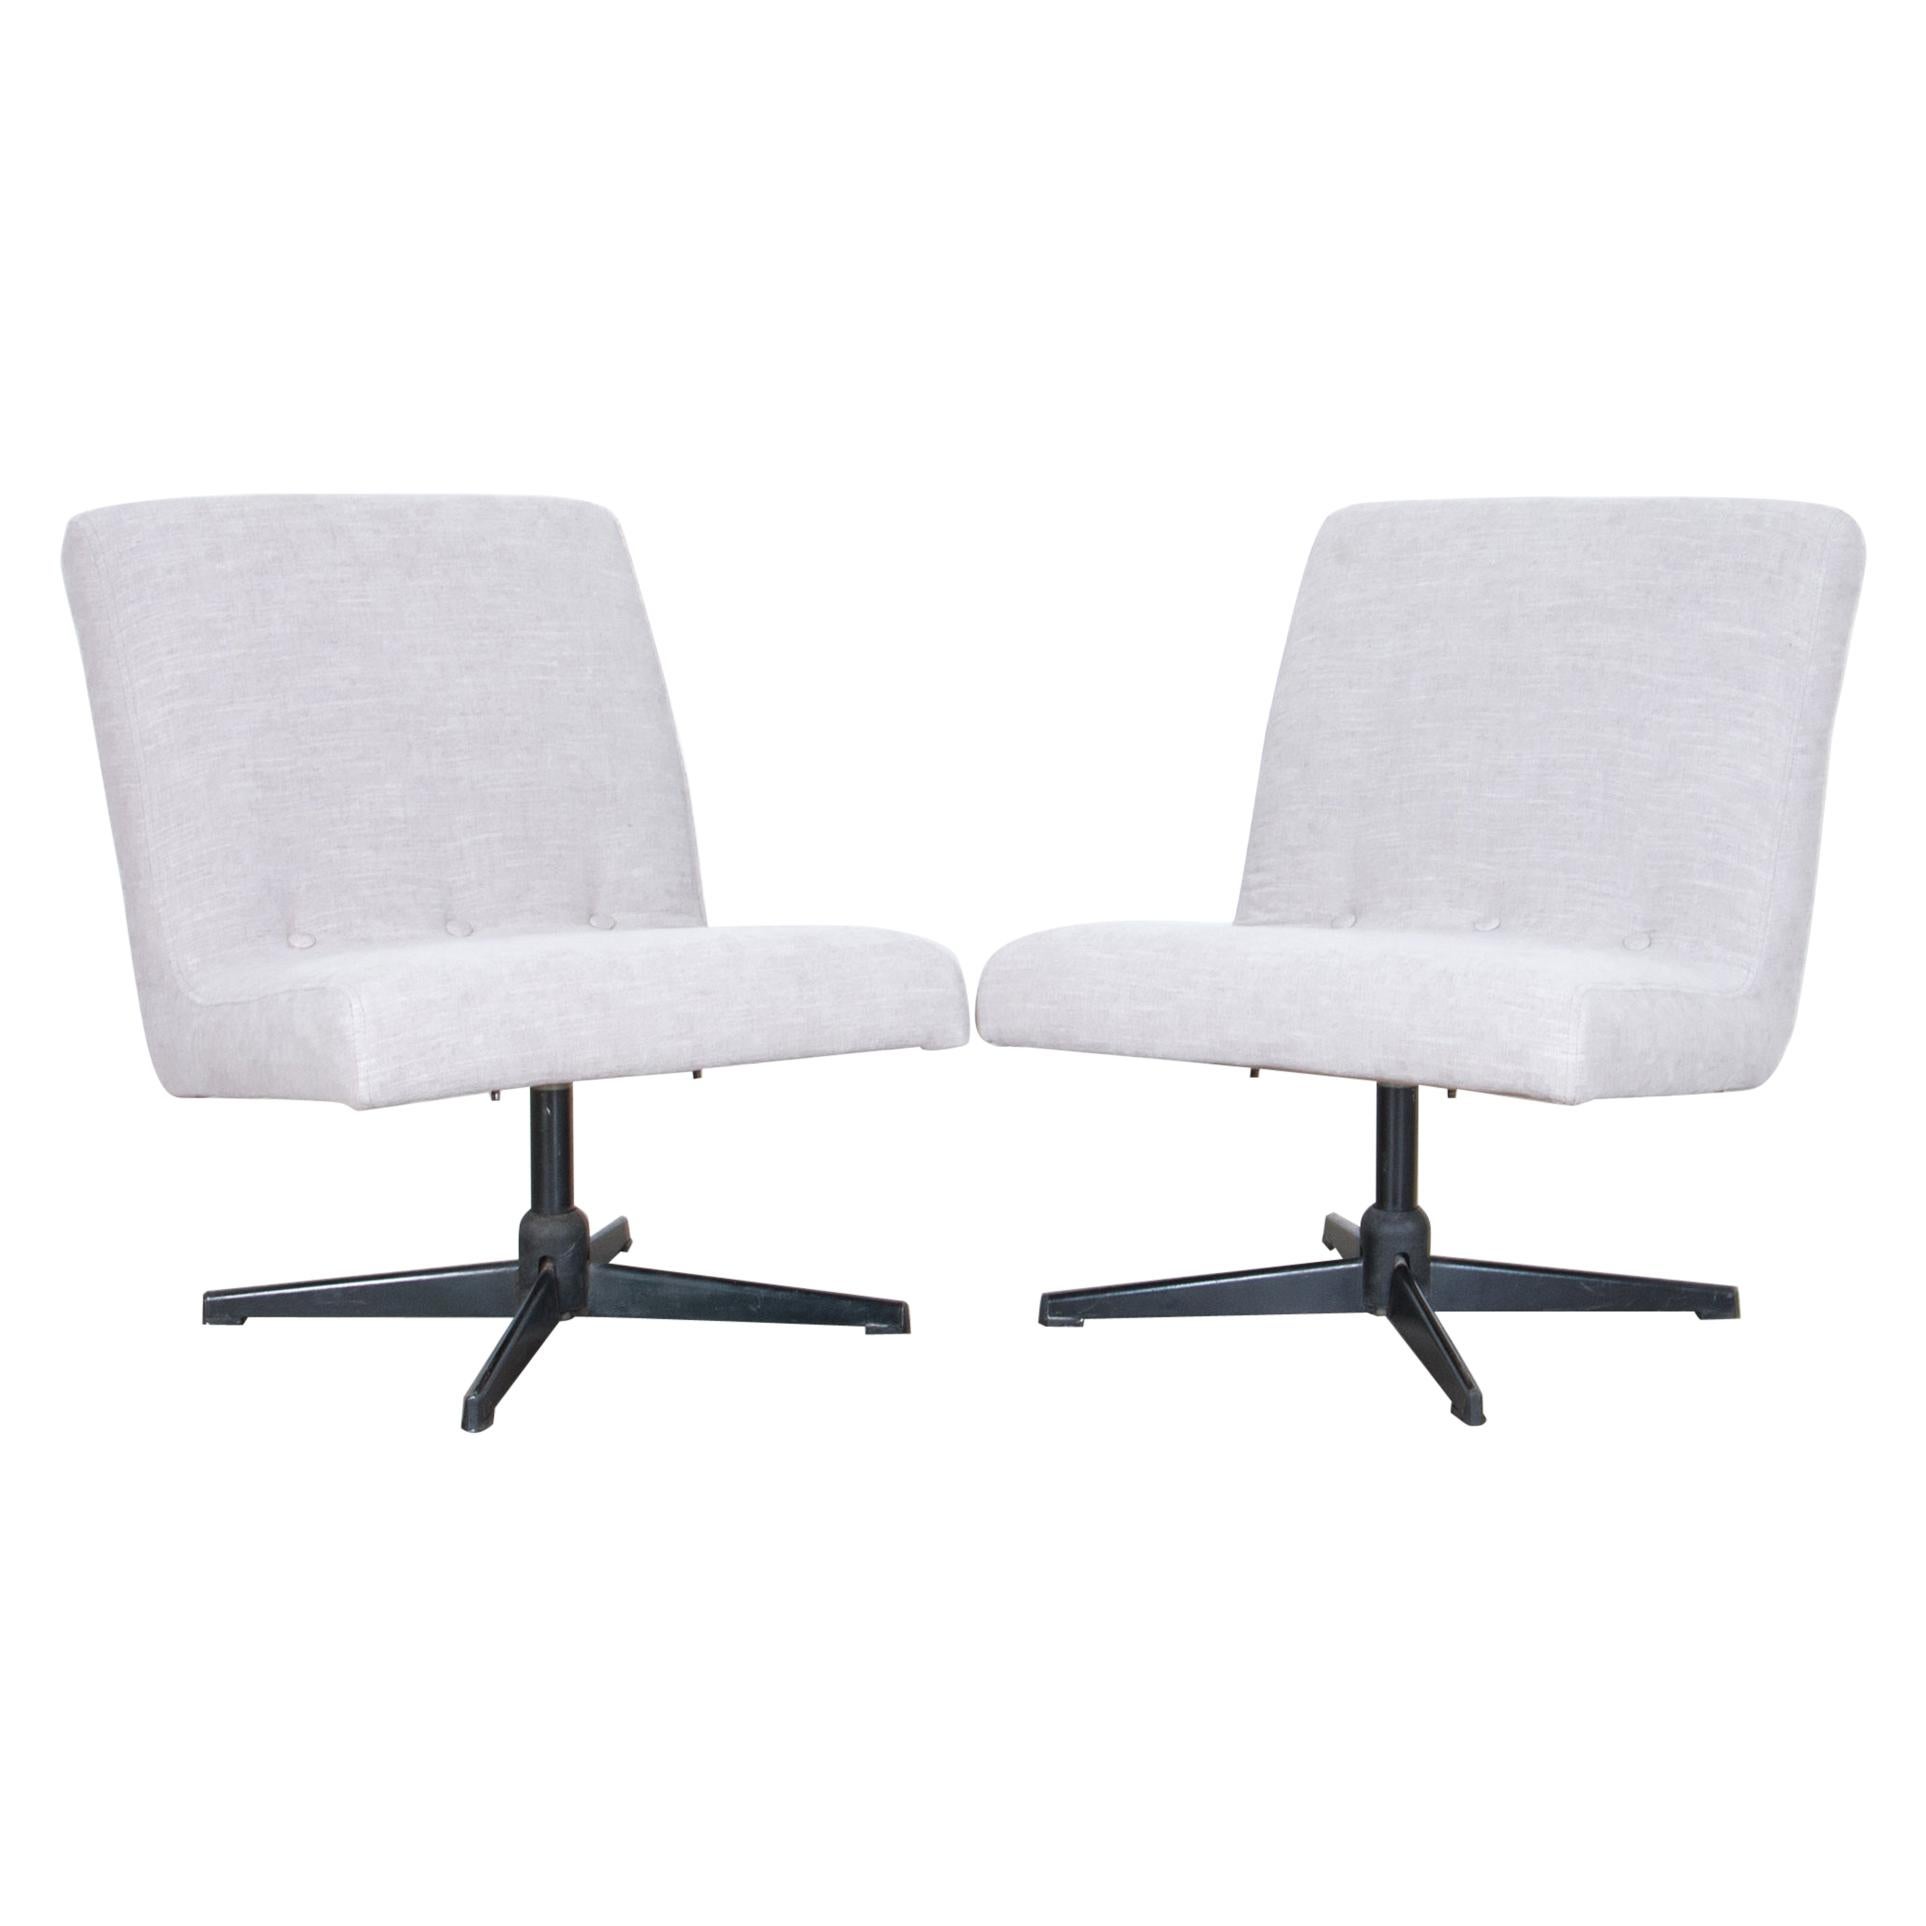 1960s Mid-Century Modern Swivel Chairs, a Pair